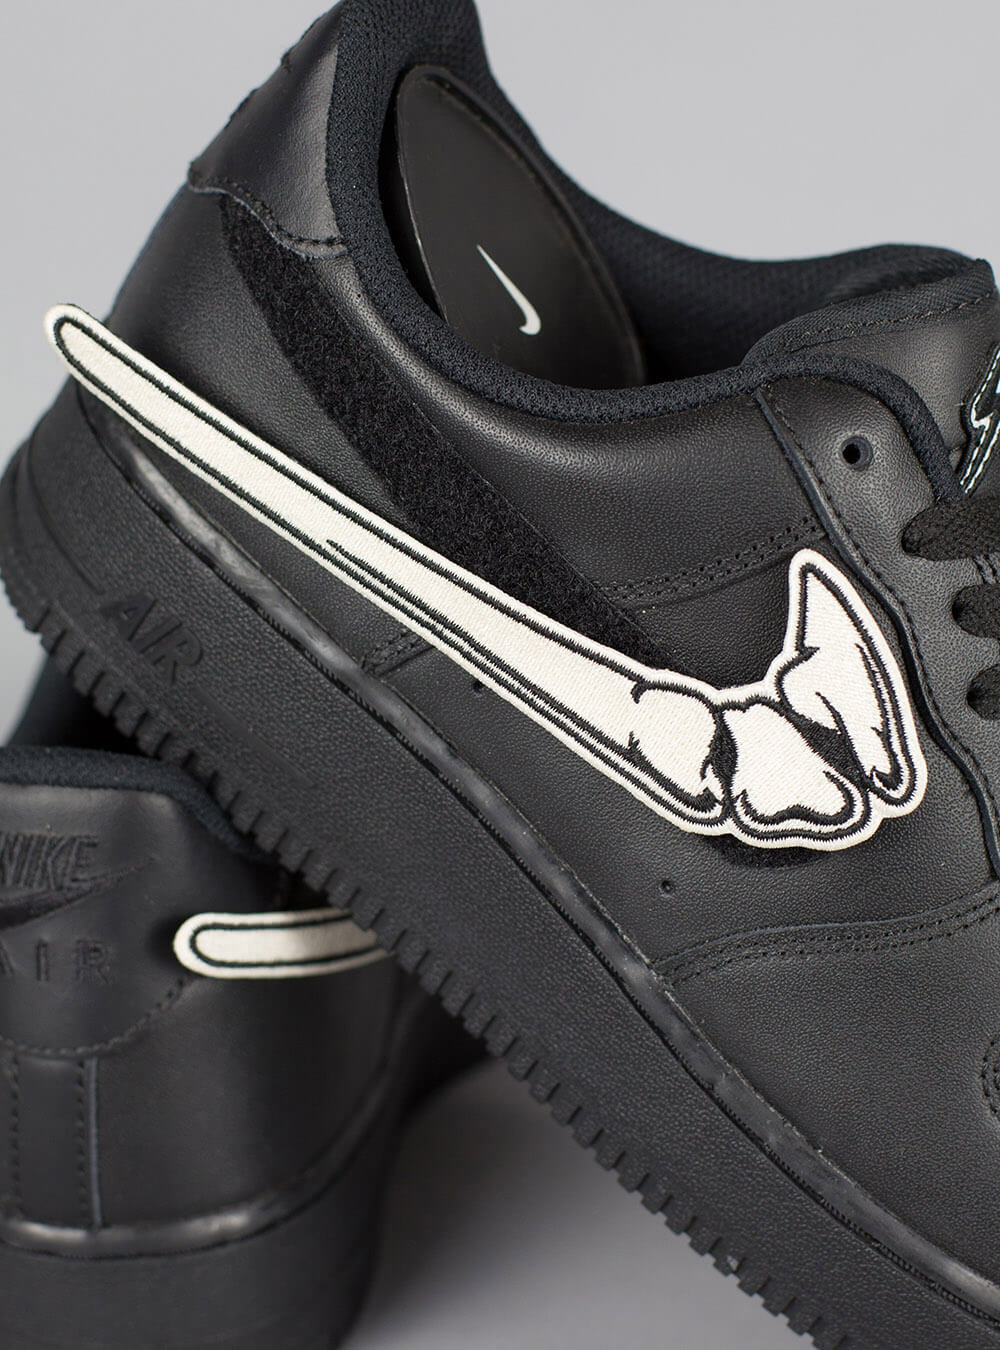 Patch Velcro AF1 black Custom sneakers